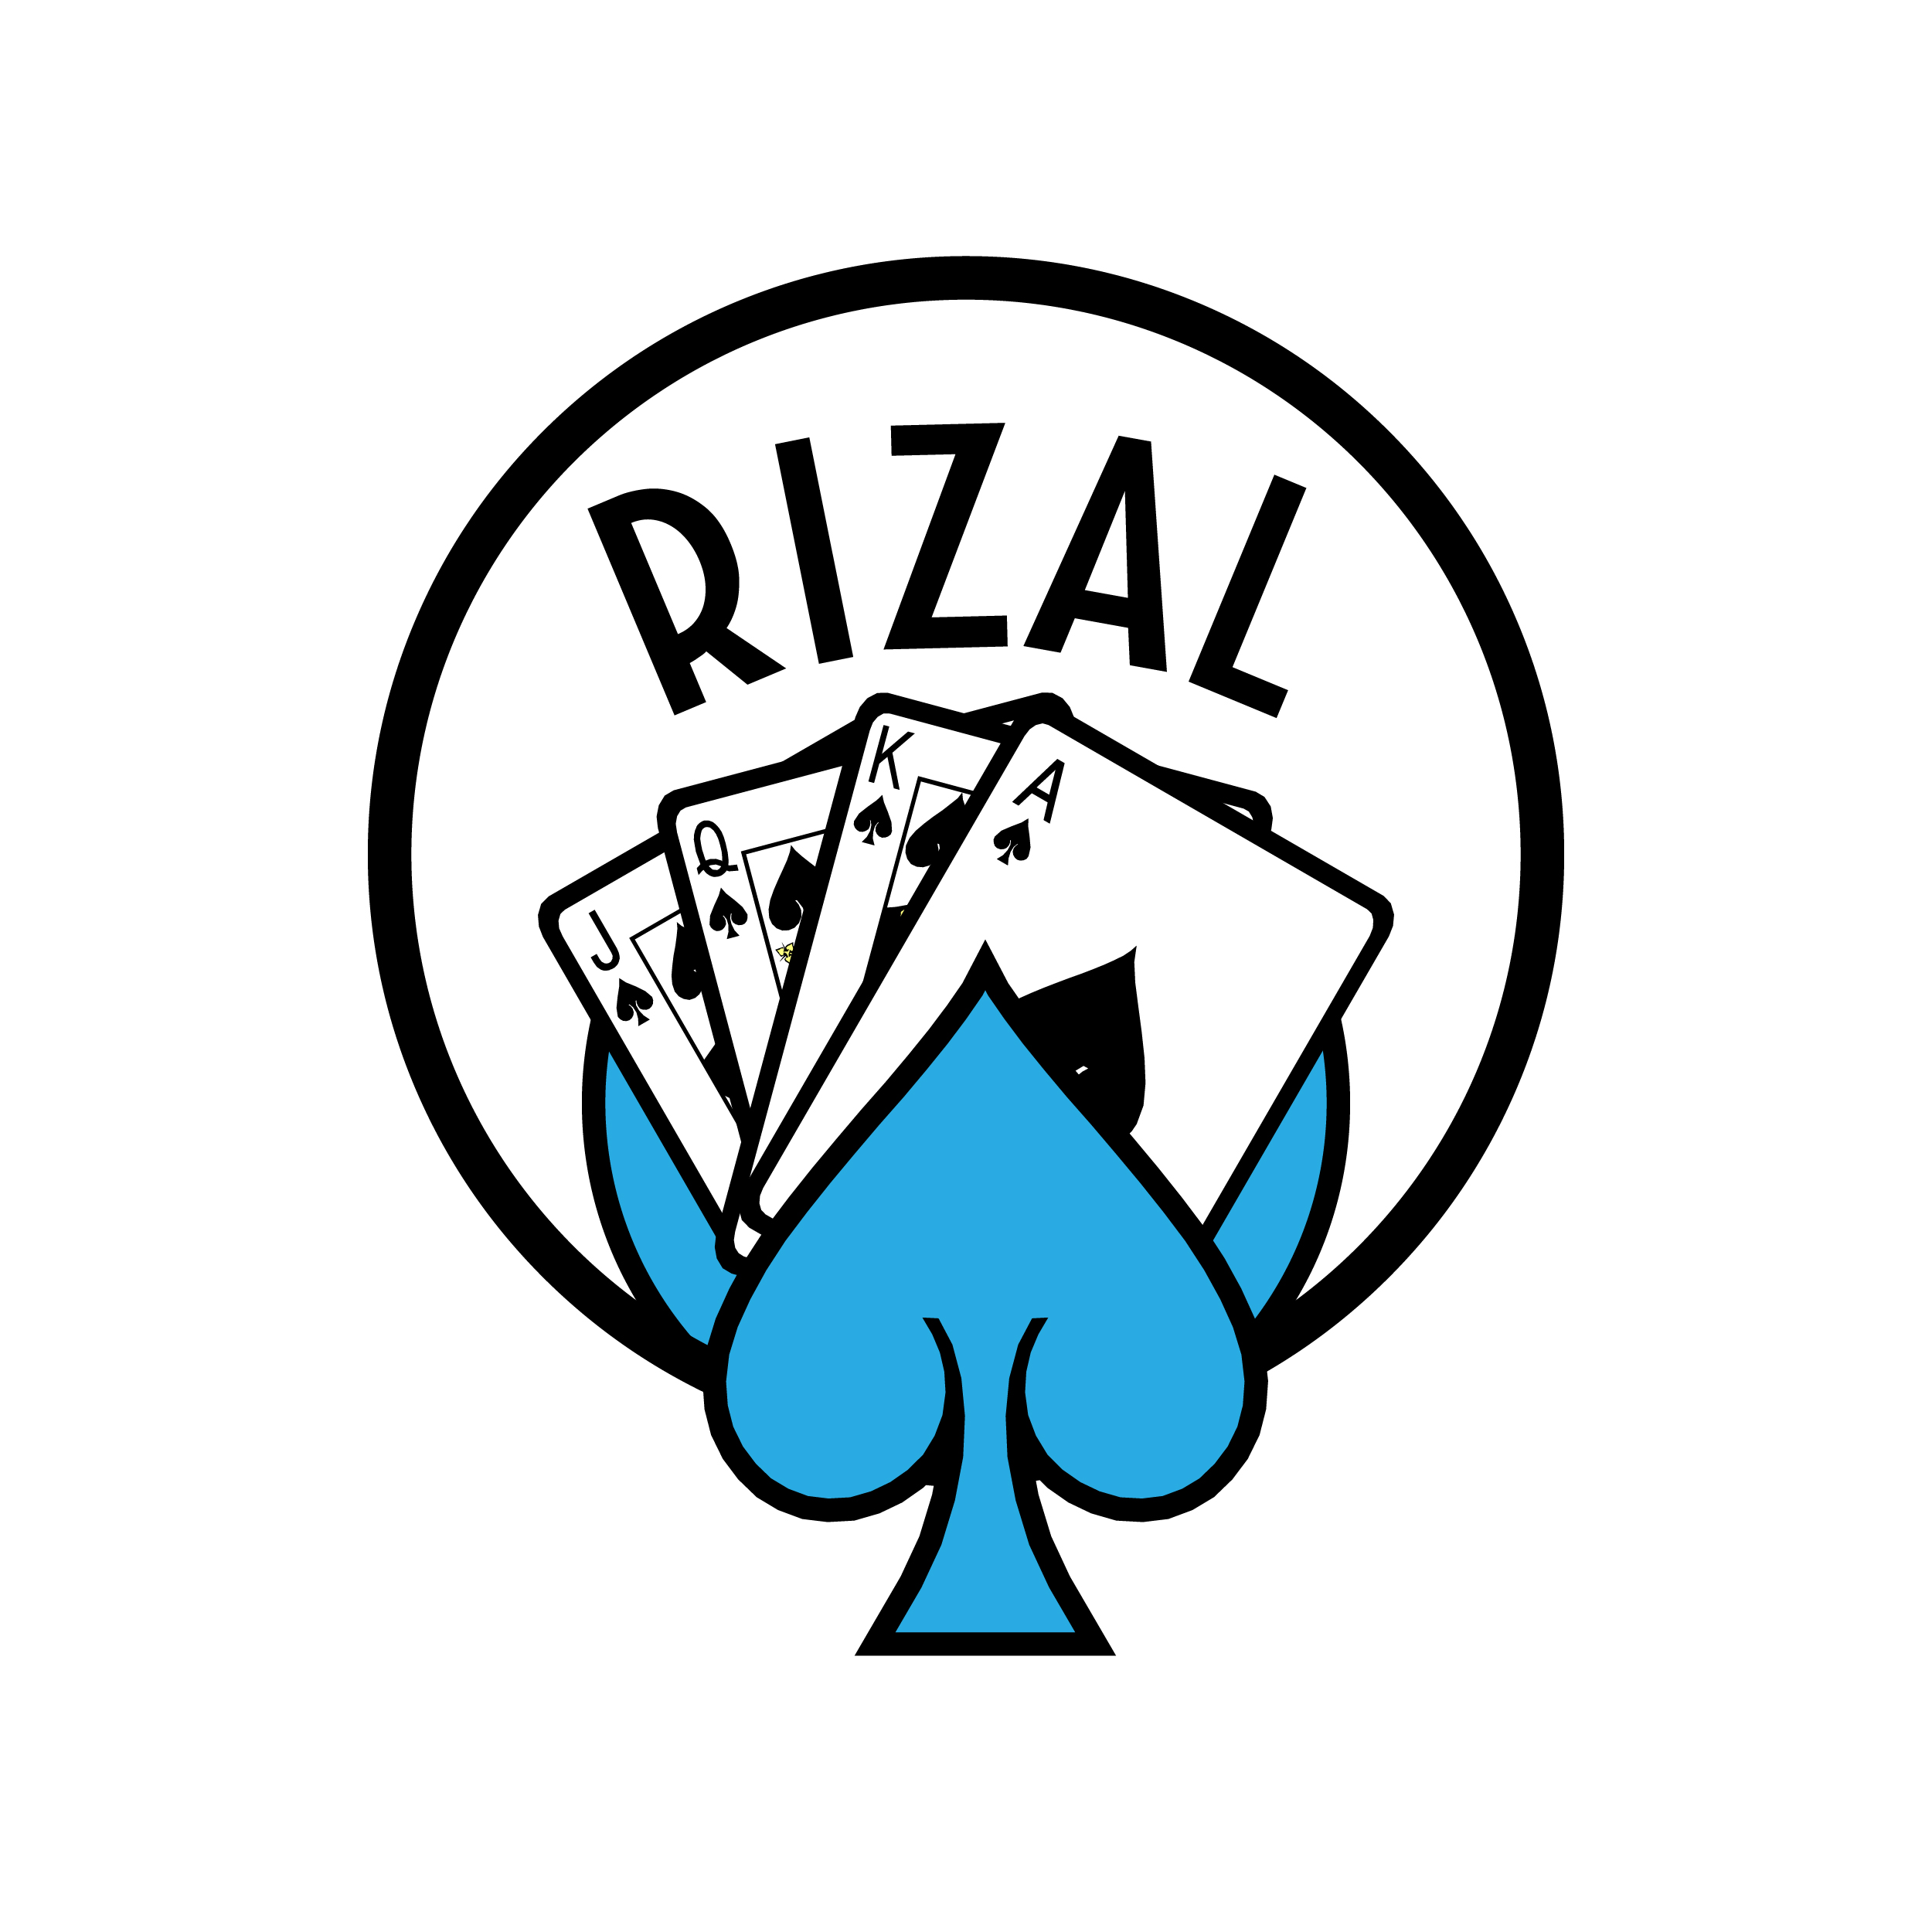 Rizal Spades